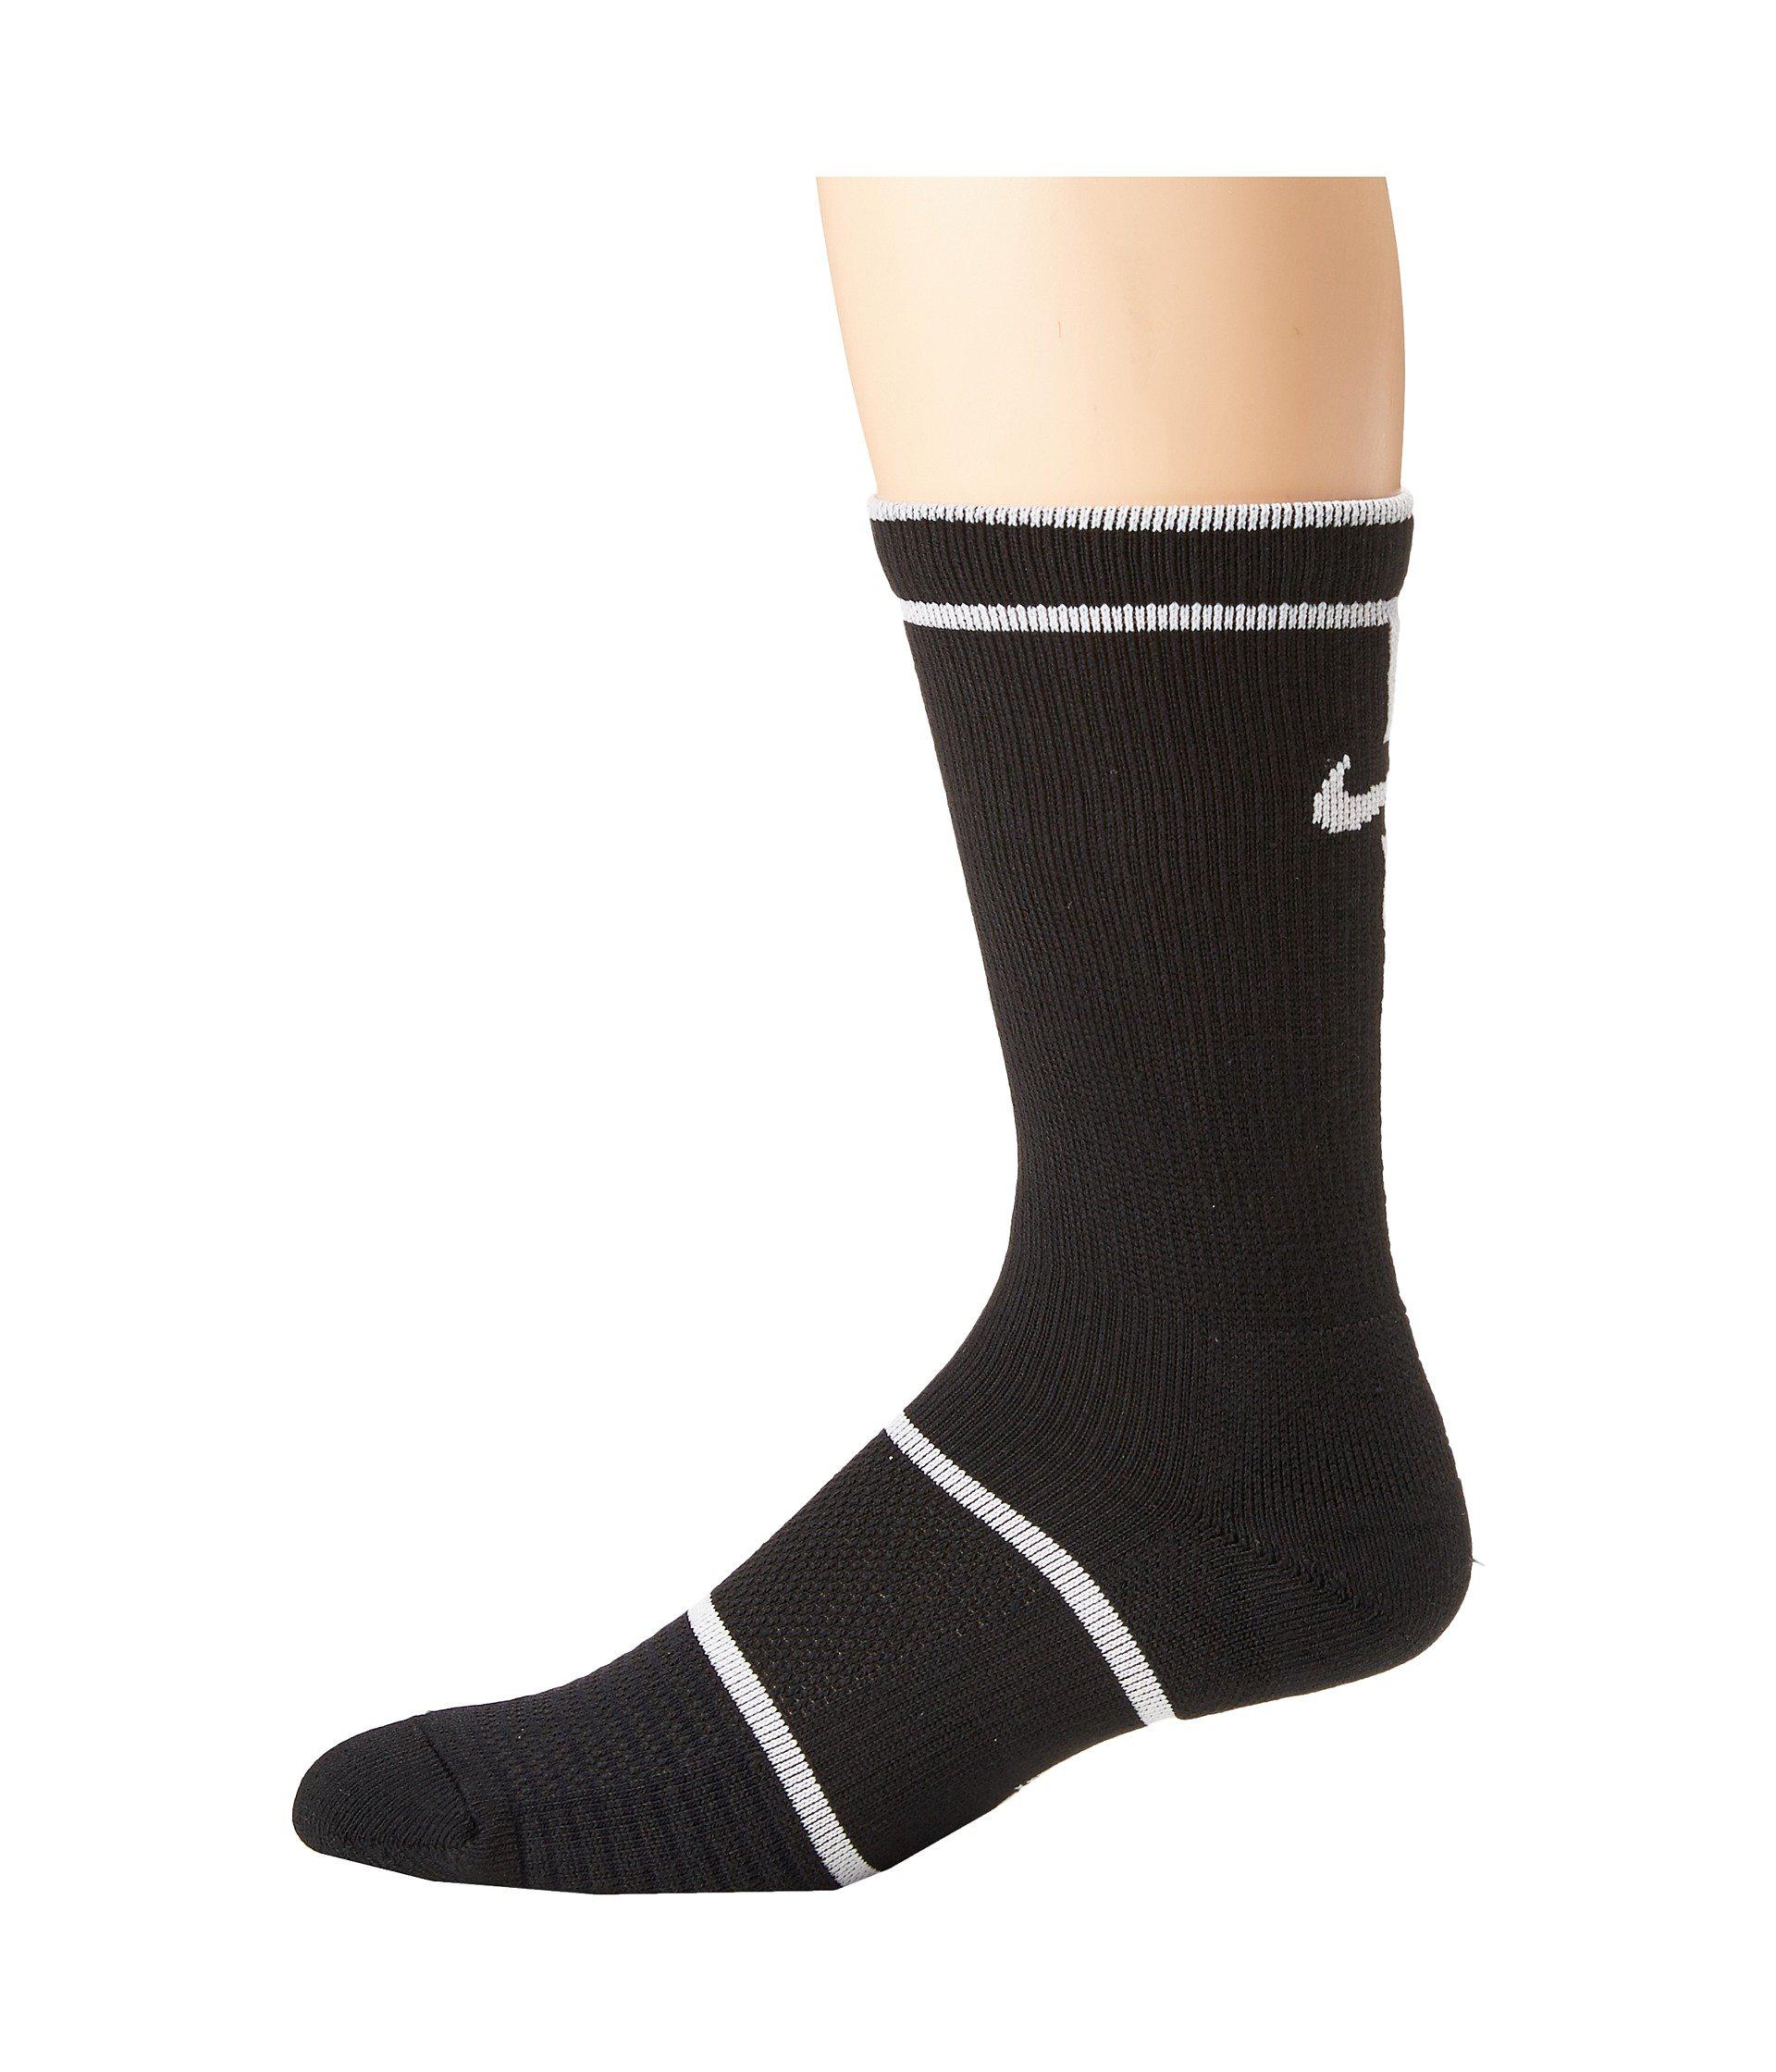 Nike Synthetic Court Essentials Crew Tennis Socks in Black/White (Black ...